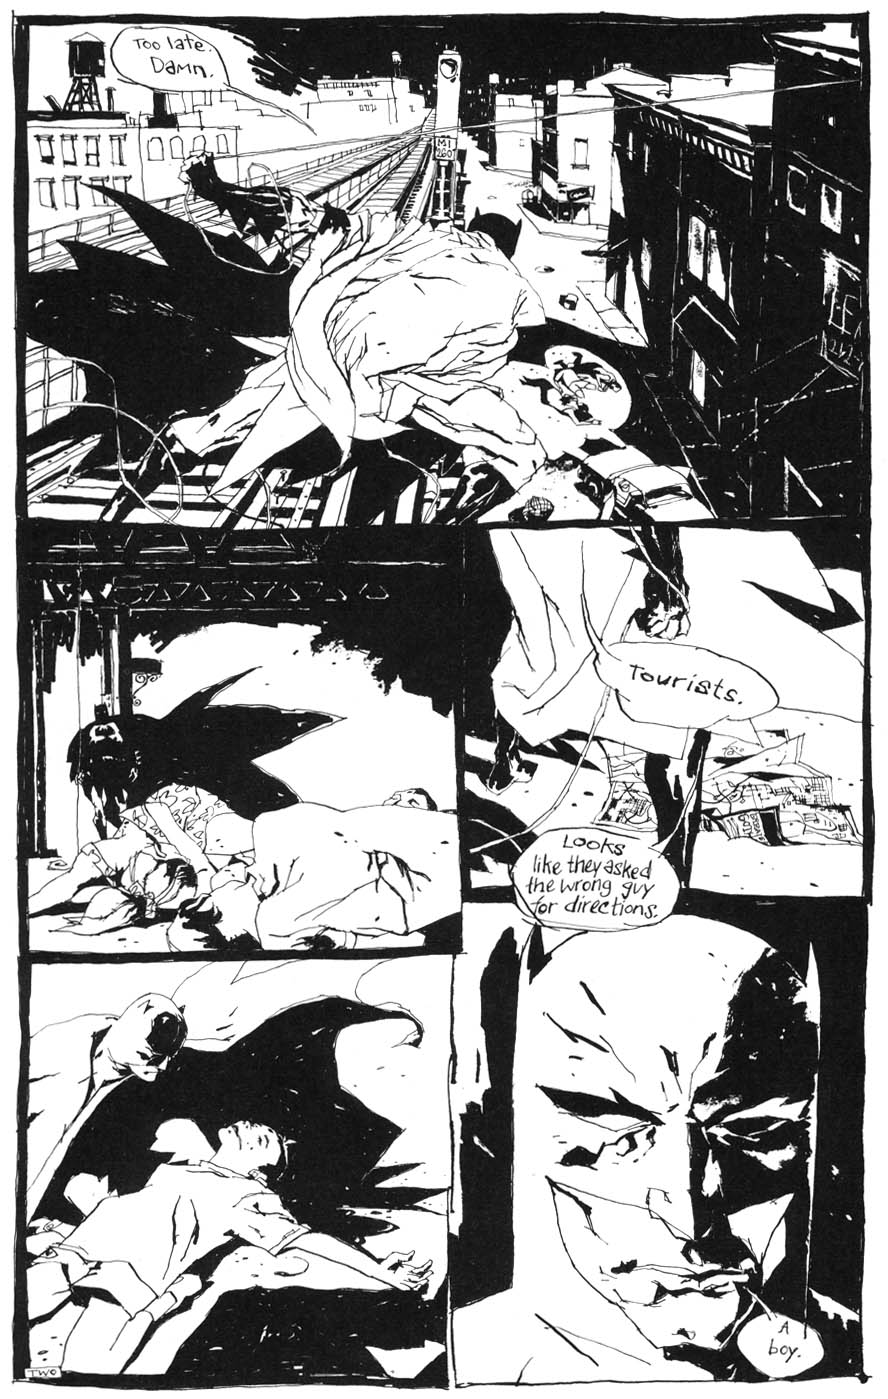 Batman - Black And White 2, Part 1 of 2